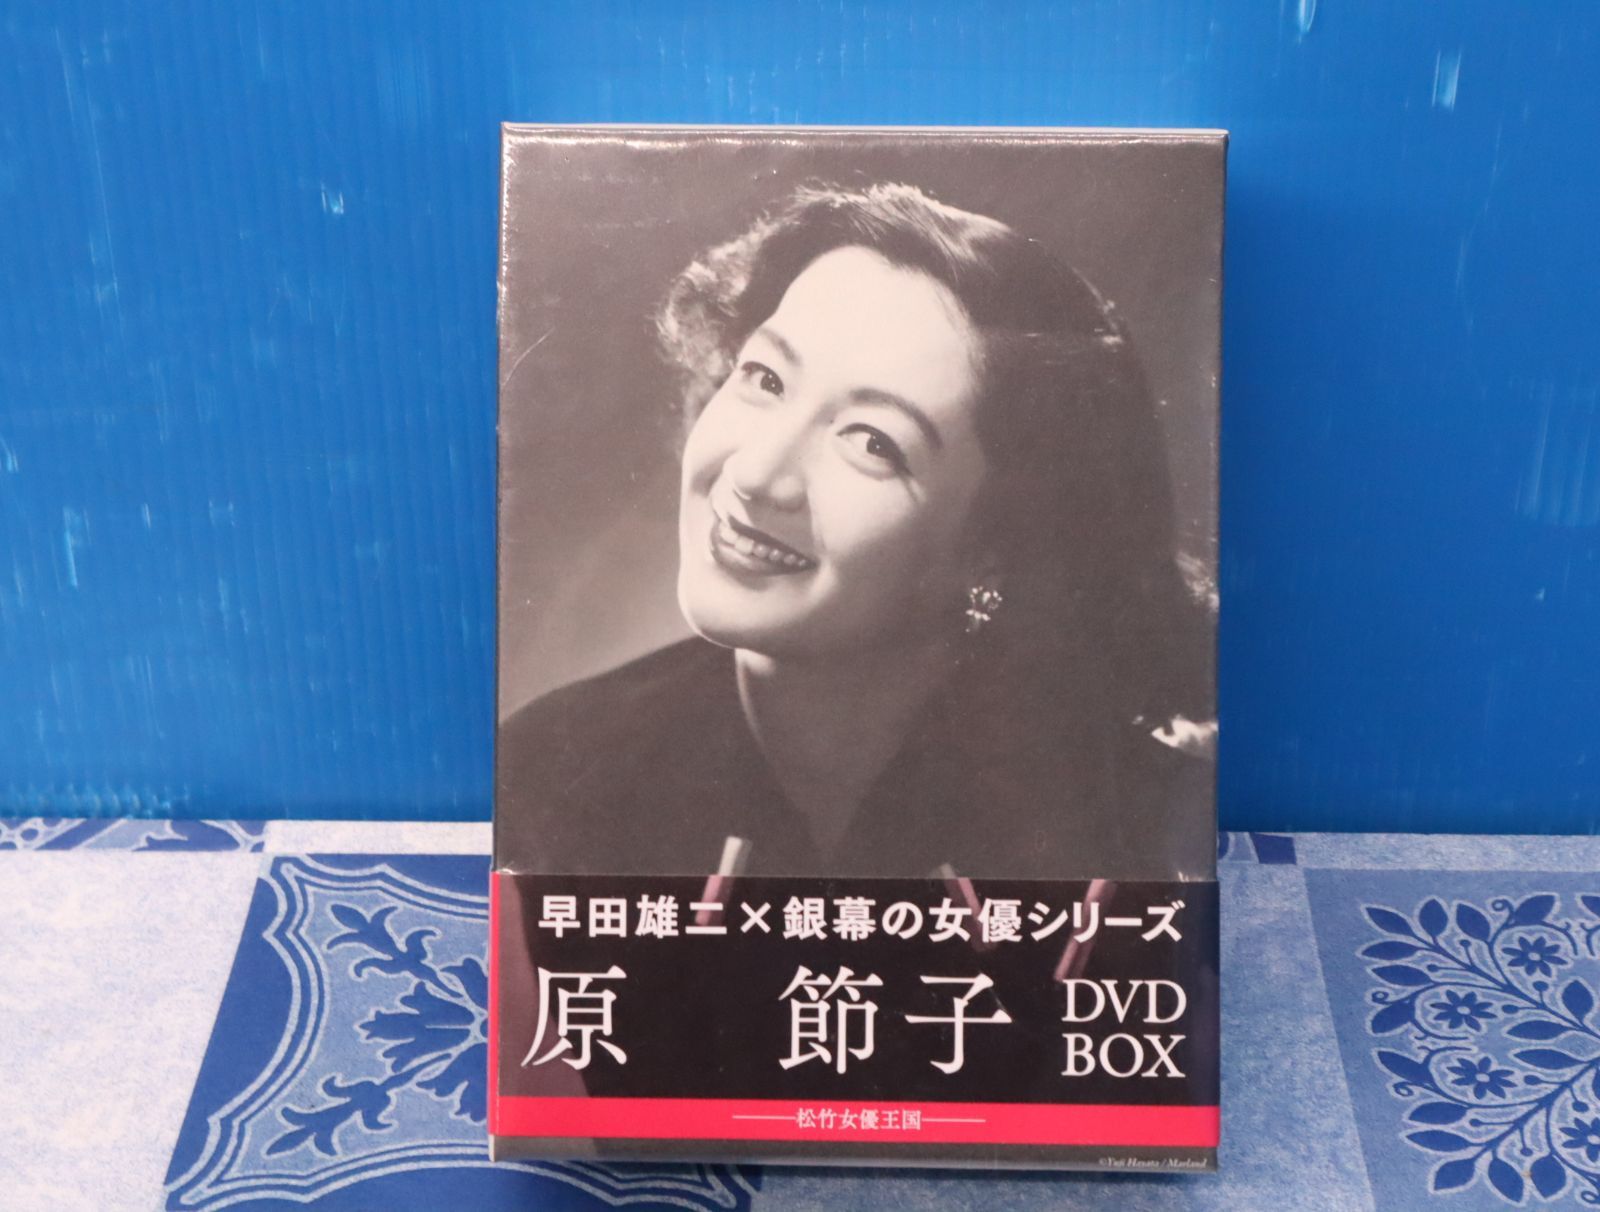 DVD 松竹女優王国 銀幕の女優シリーズ 田中絹代 DVD-BOX - DVD